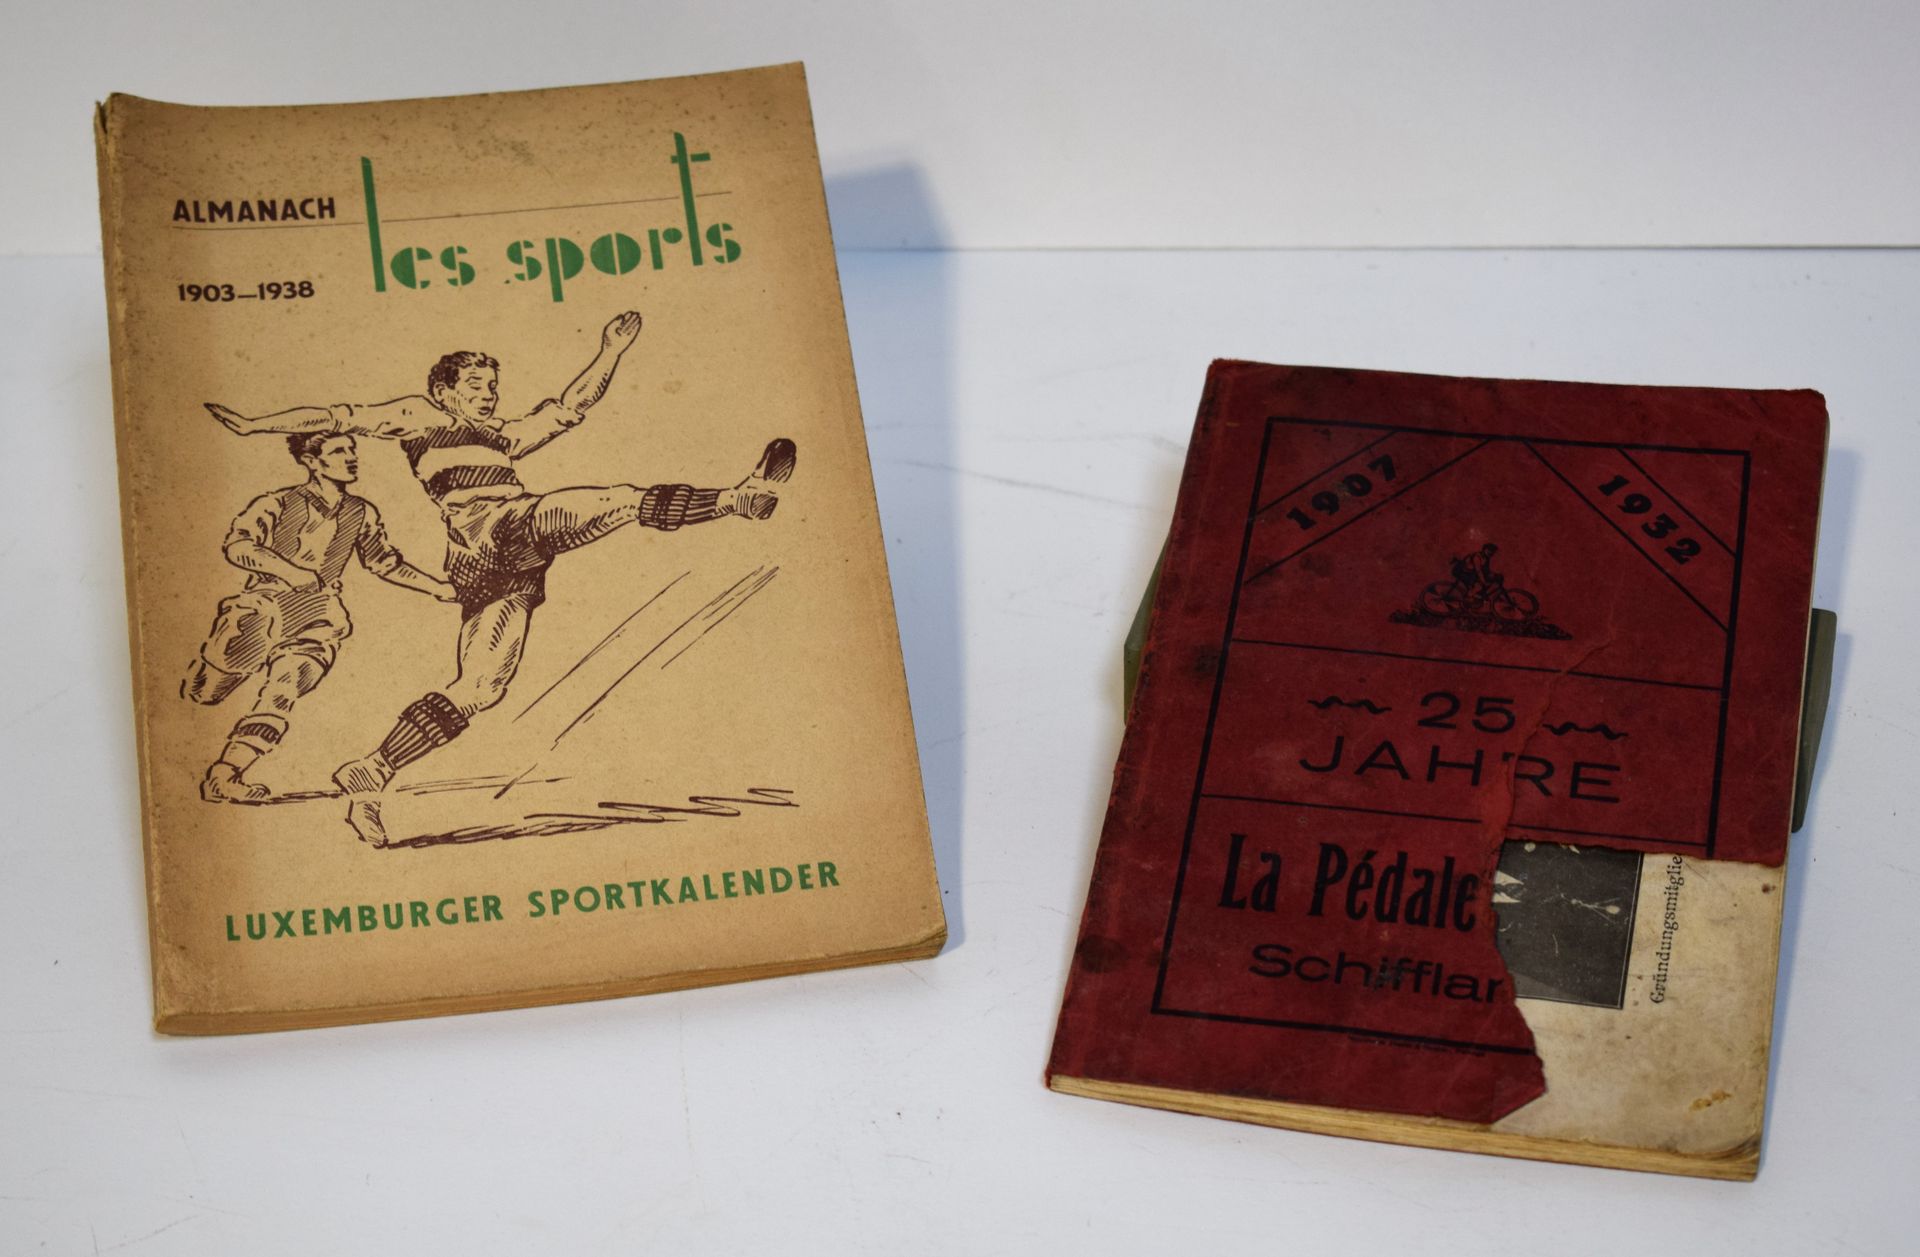 Null (Sport) 1. V. C. "La Pédale 1907" Schifflange : Programm des 25jährigen Sti&hellip;